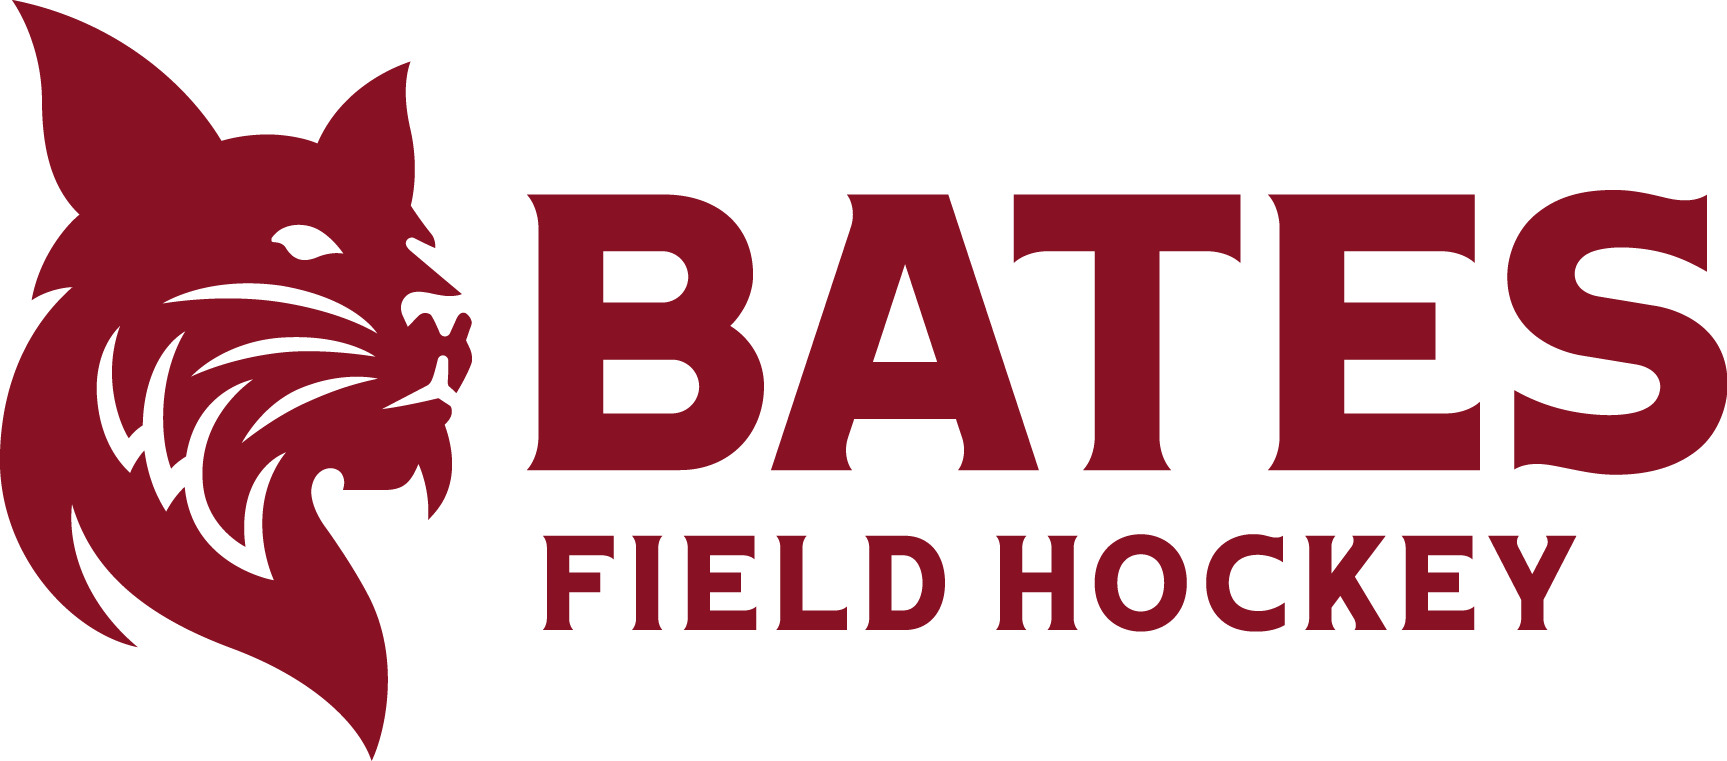 Bates Field Hockey Logo png icons